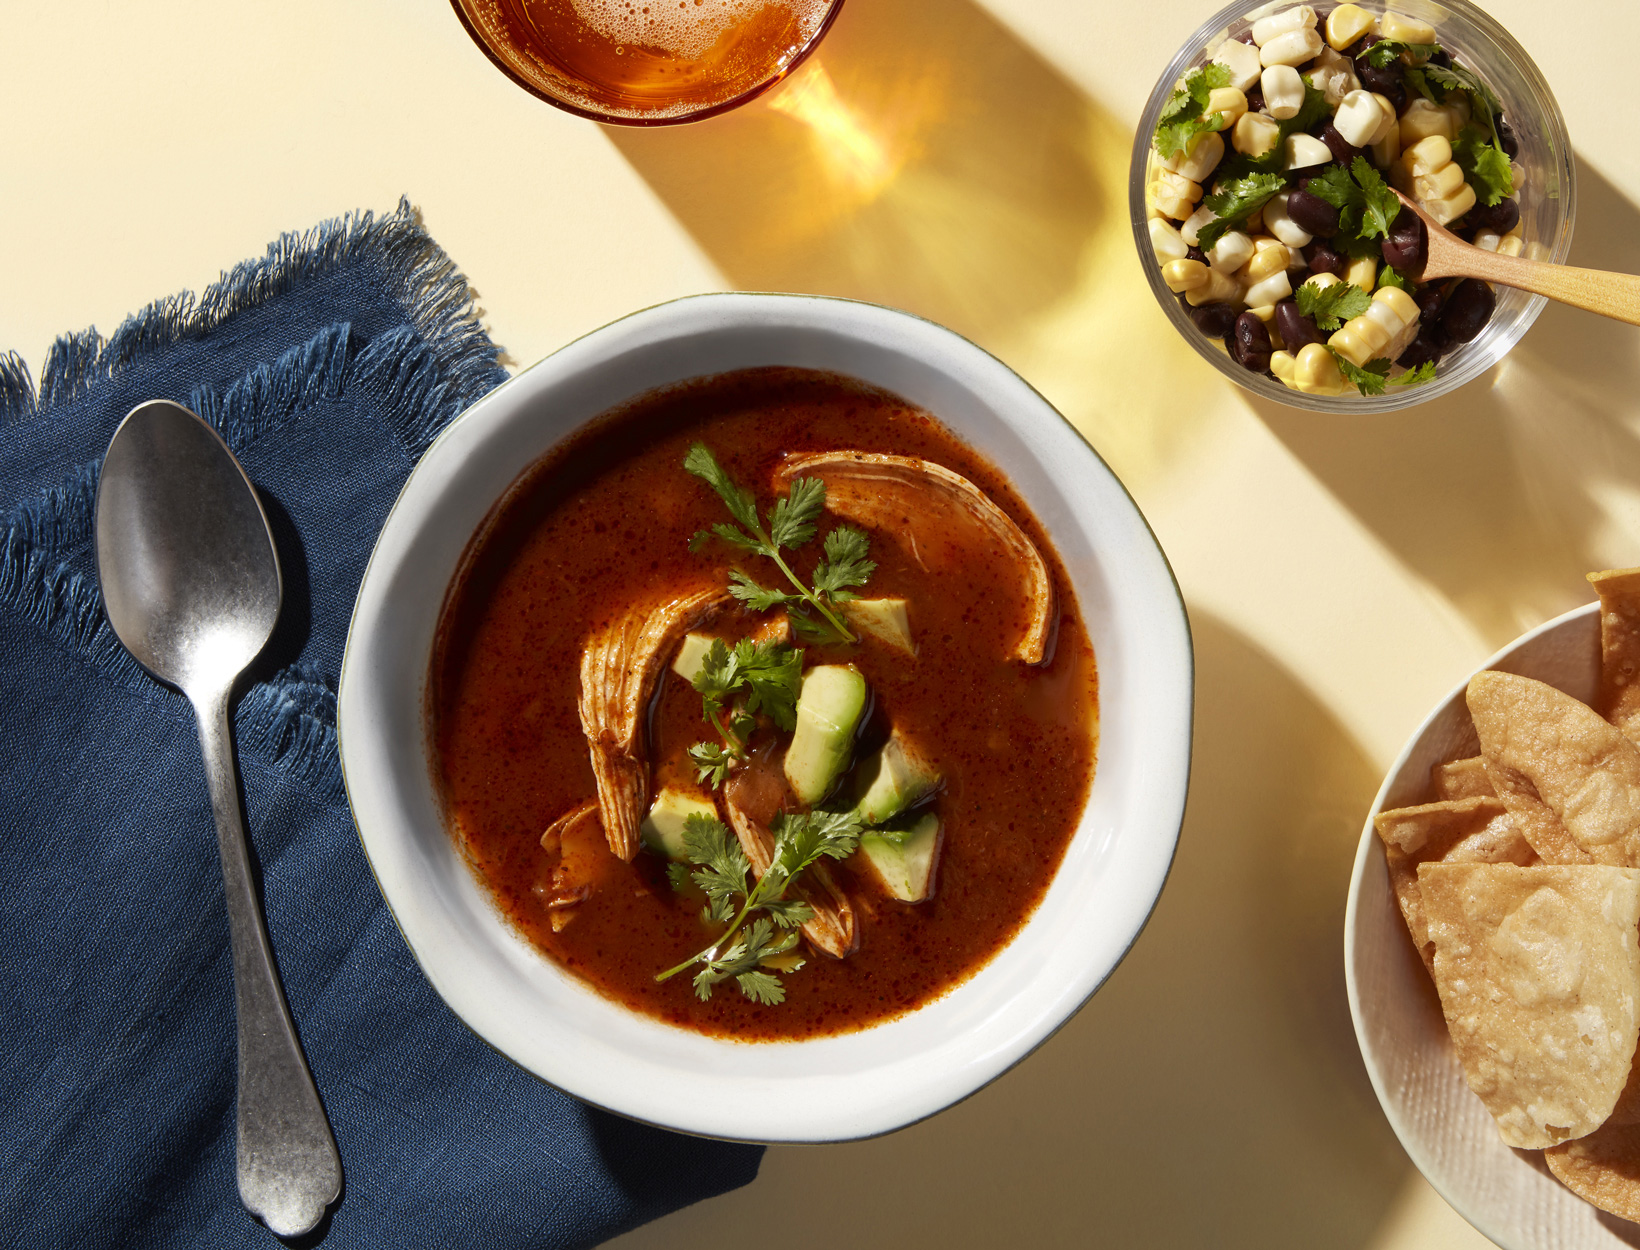 Tuesday: Tortilla Soup with Cowboy Caviar